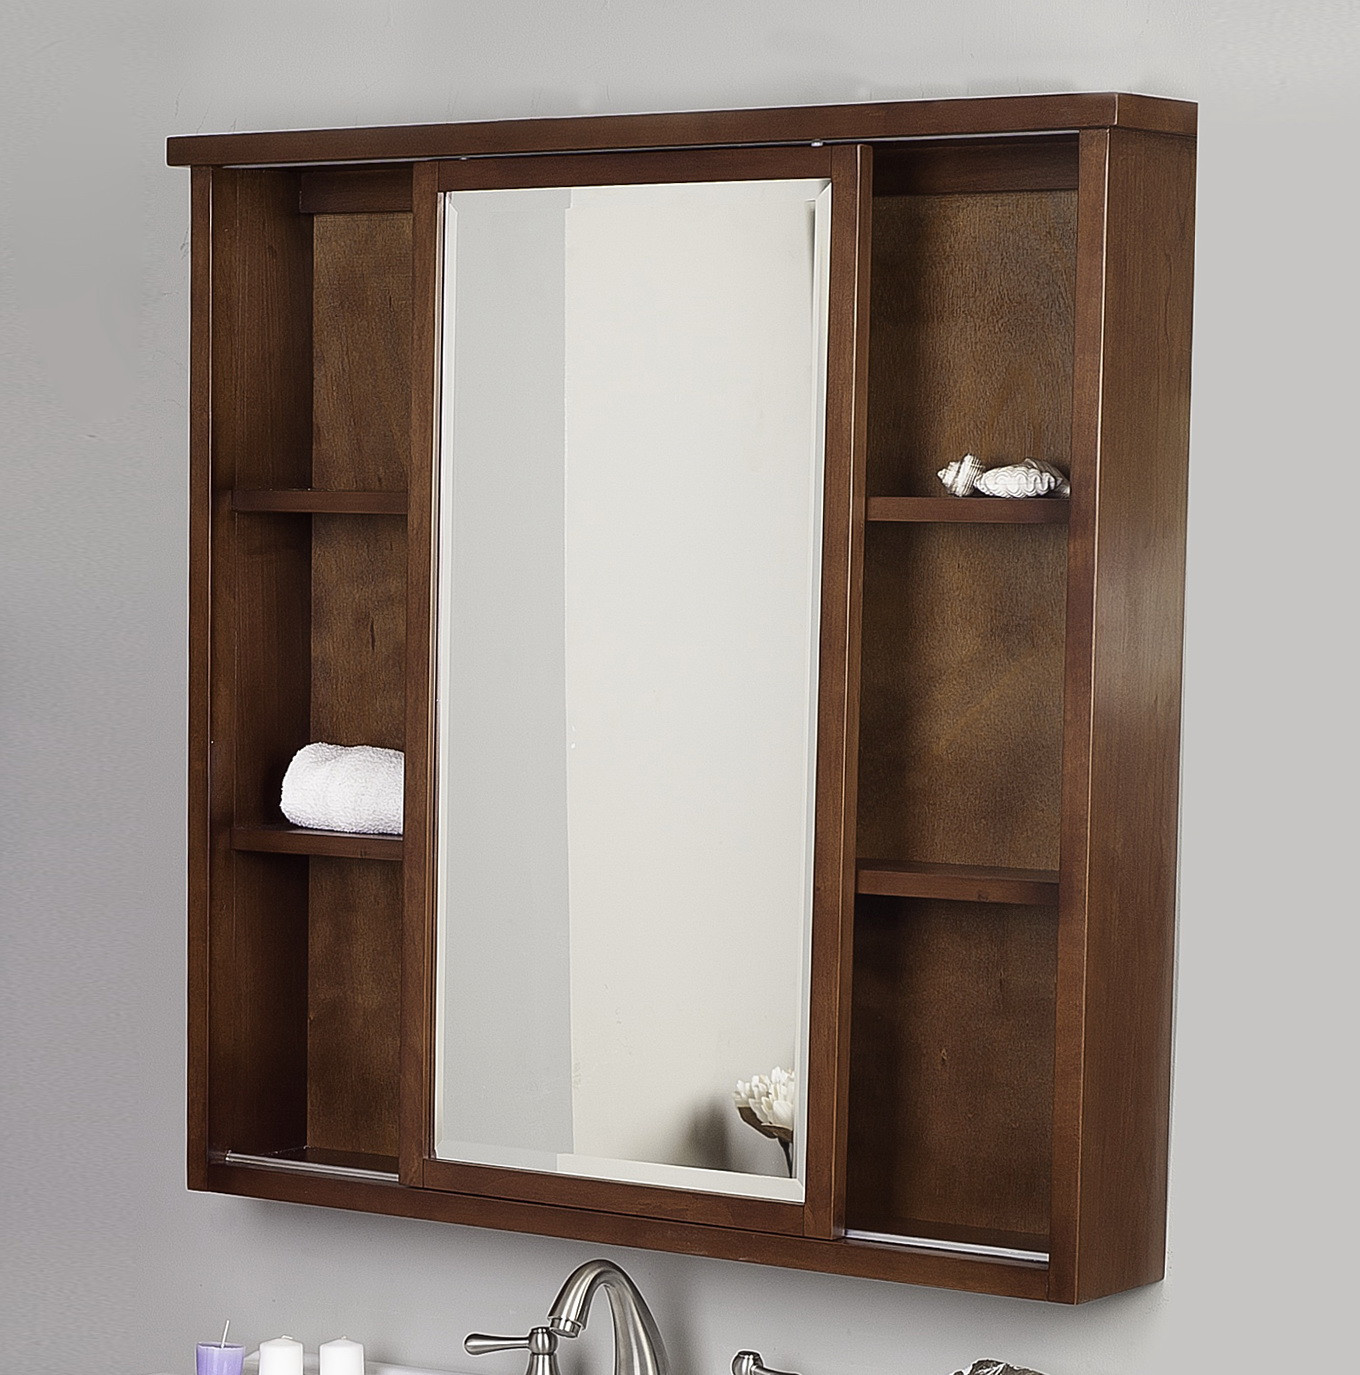 Home Depot Bathroom Mirrors Cabinets
 Home Depot Mirror Bathroom Home Design Idea Lighted